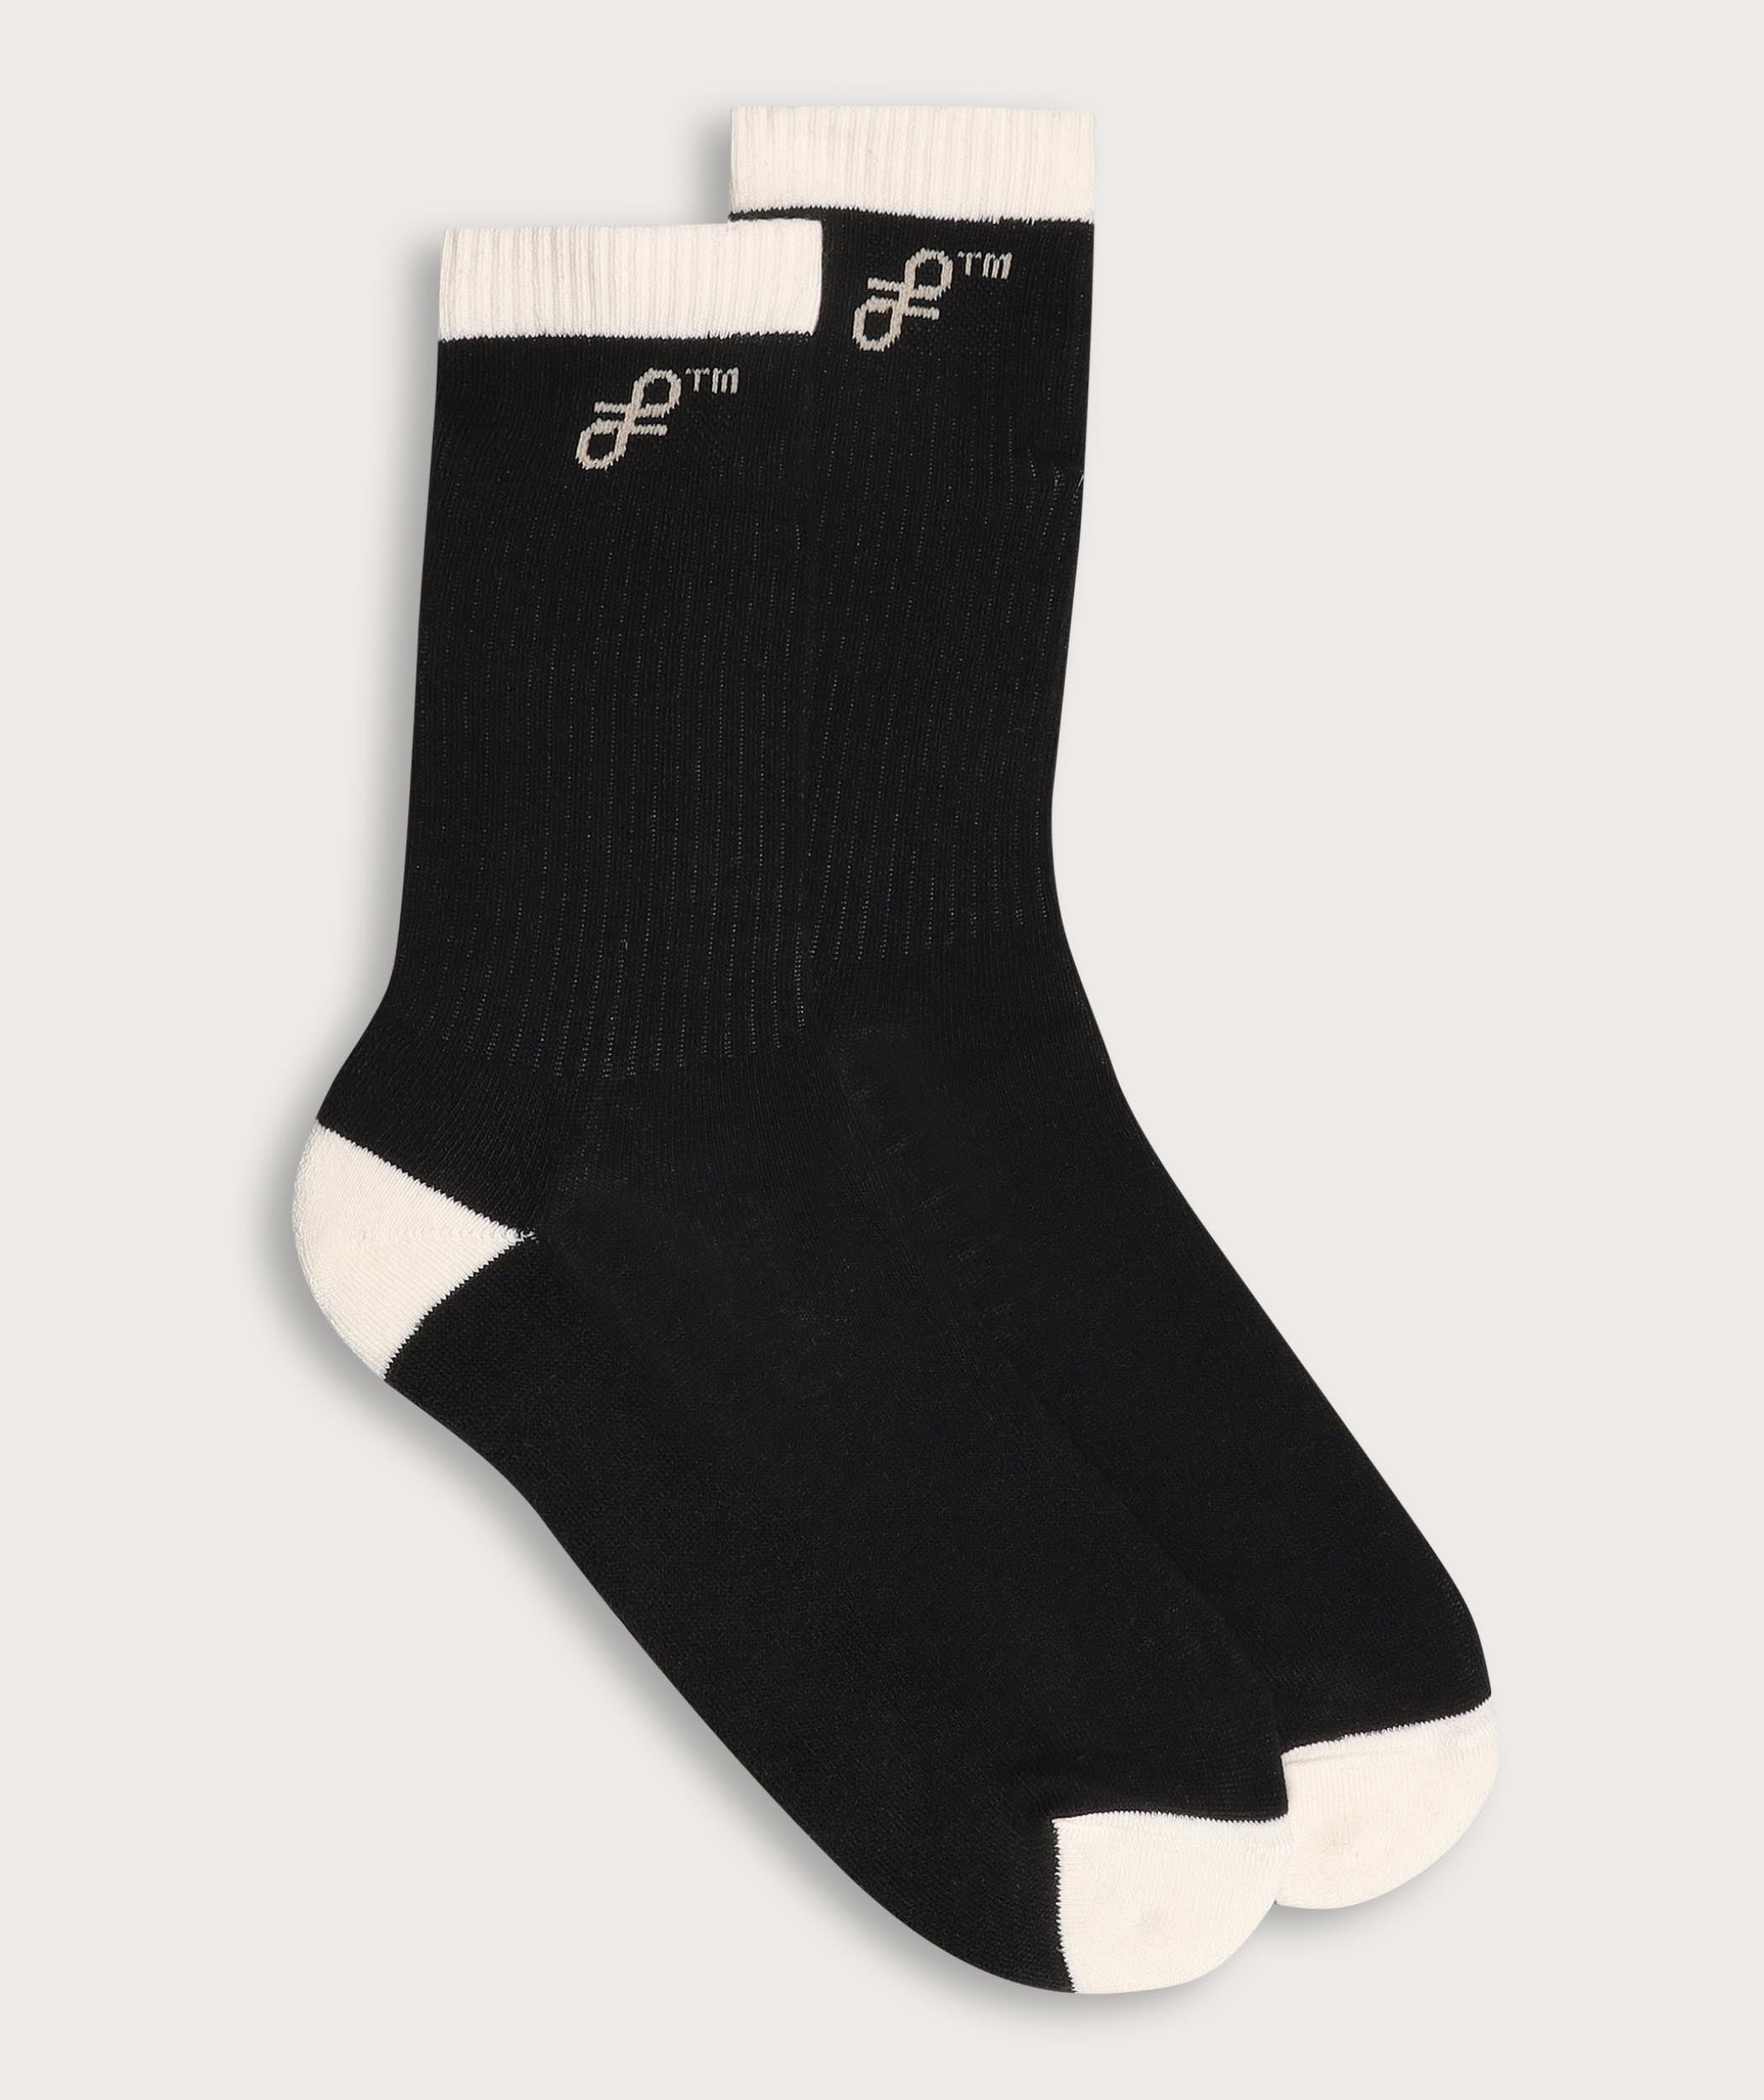 Socks FOM Active - Black/ Off-White Knot (Size 4-7)